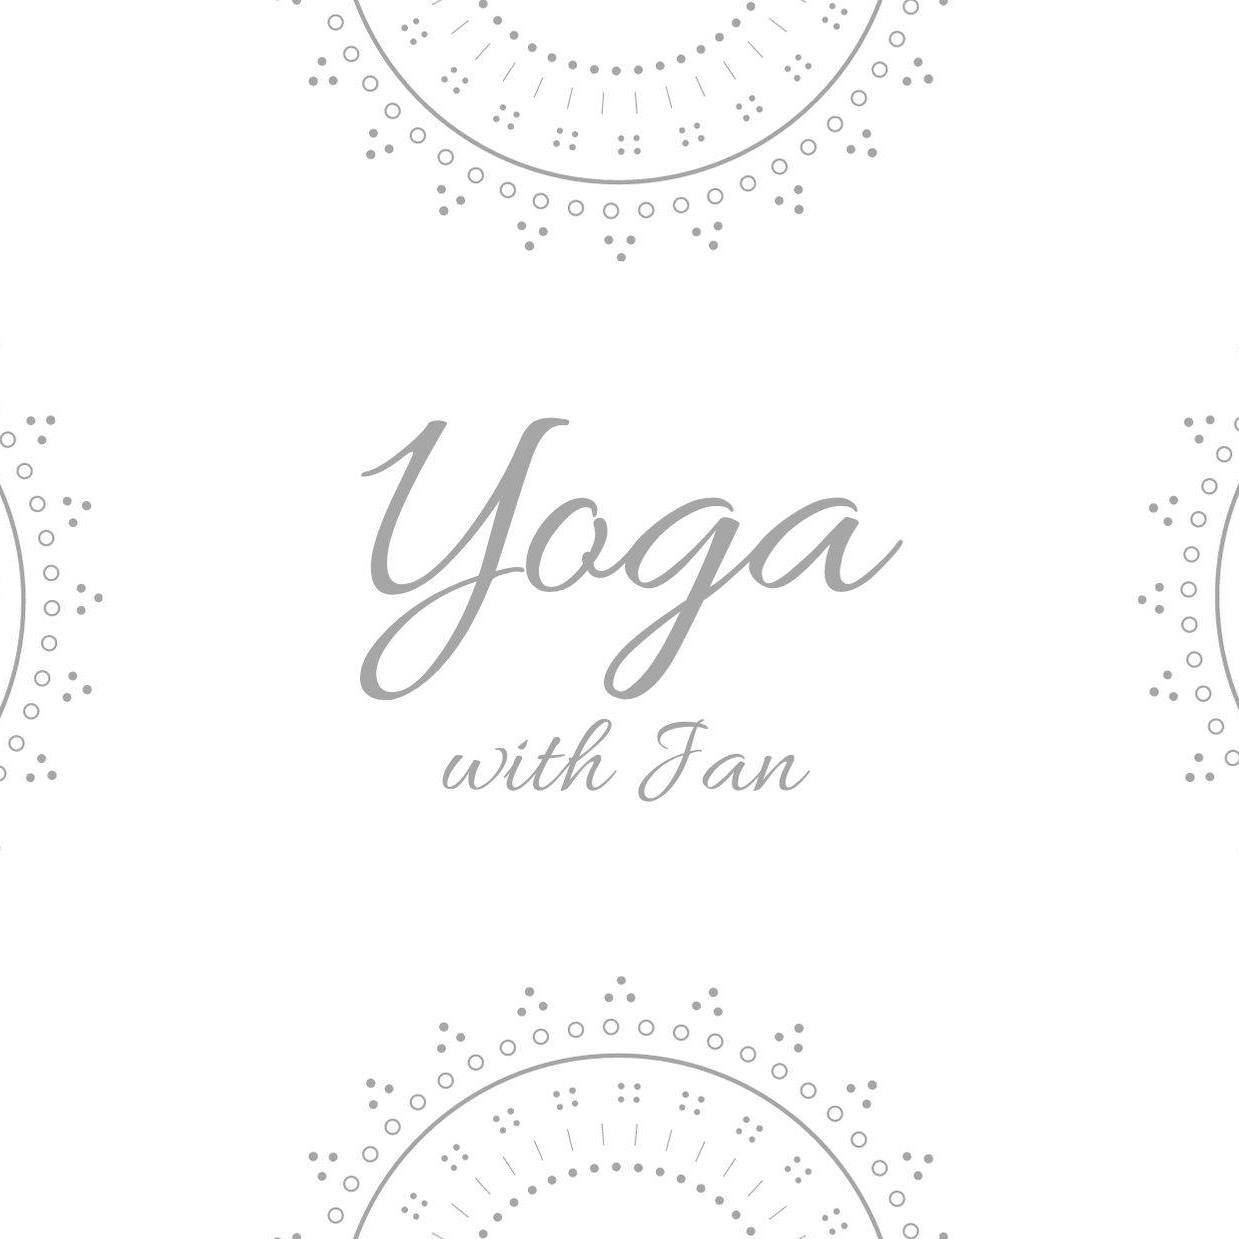 Yoga with Jan logo